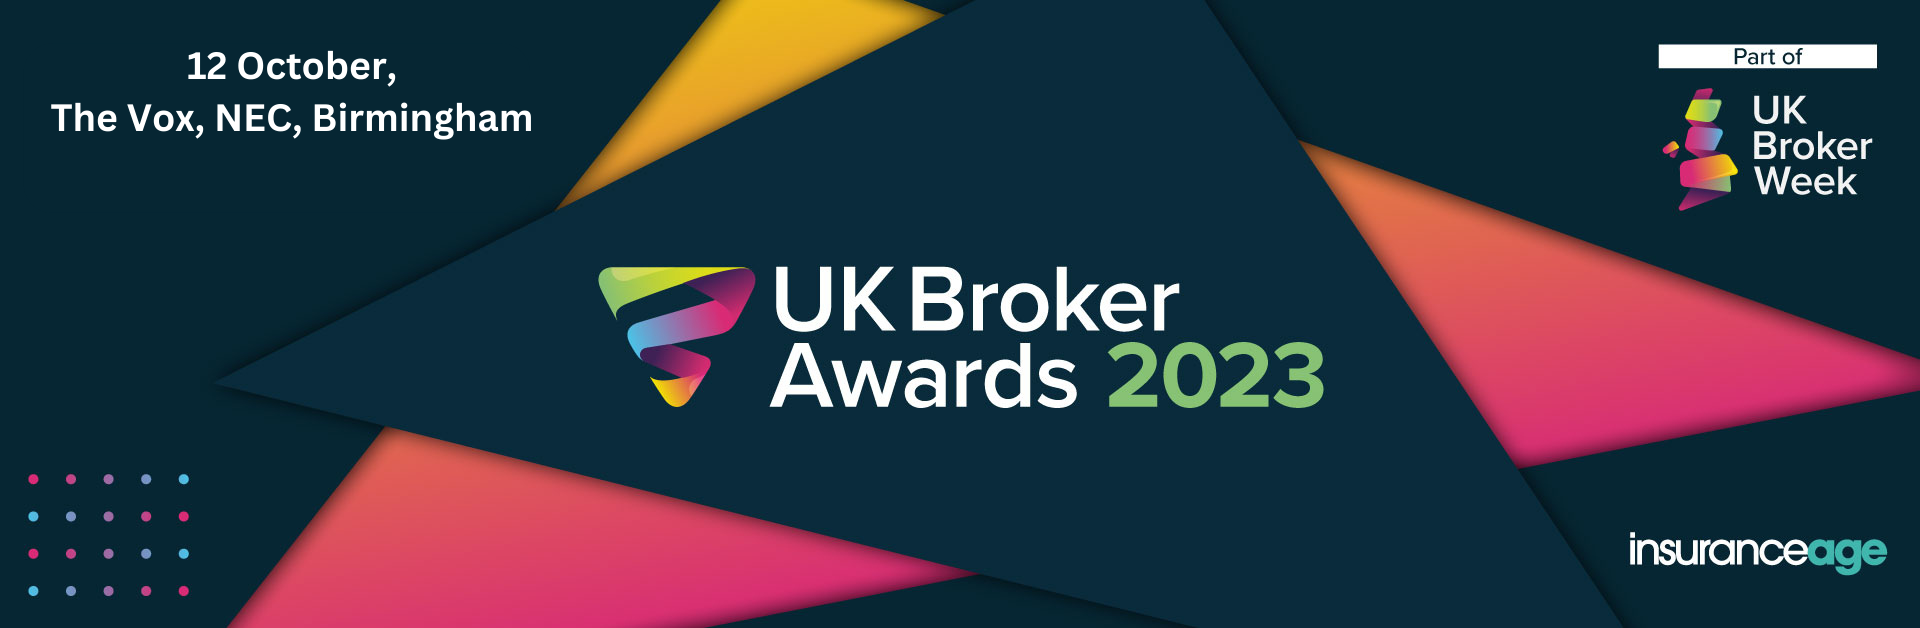 UK Broker Awards